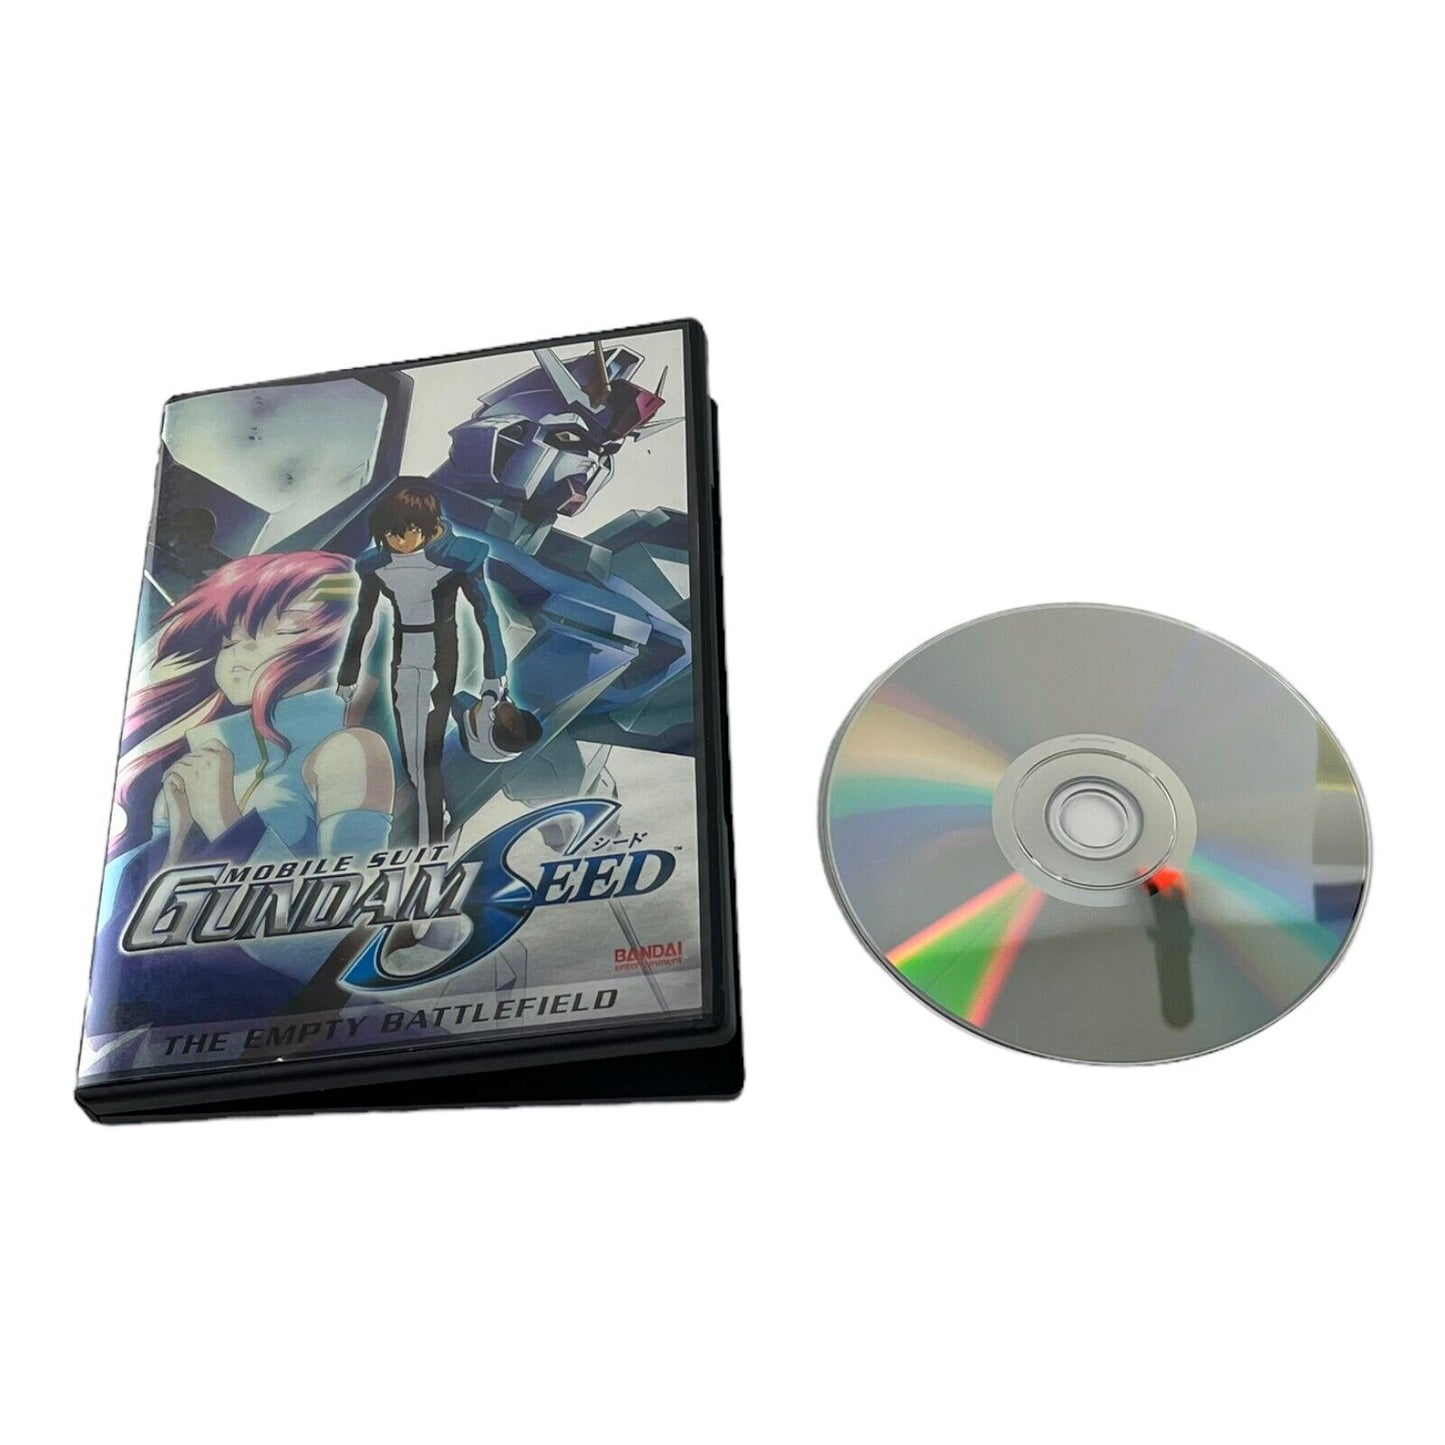 Mobile Suit Gundam Seed The Empty Battlefield DVD Anime Bandai